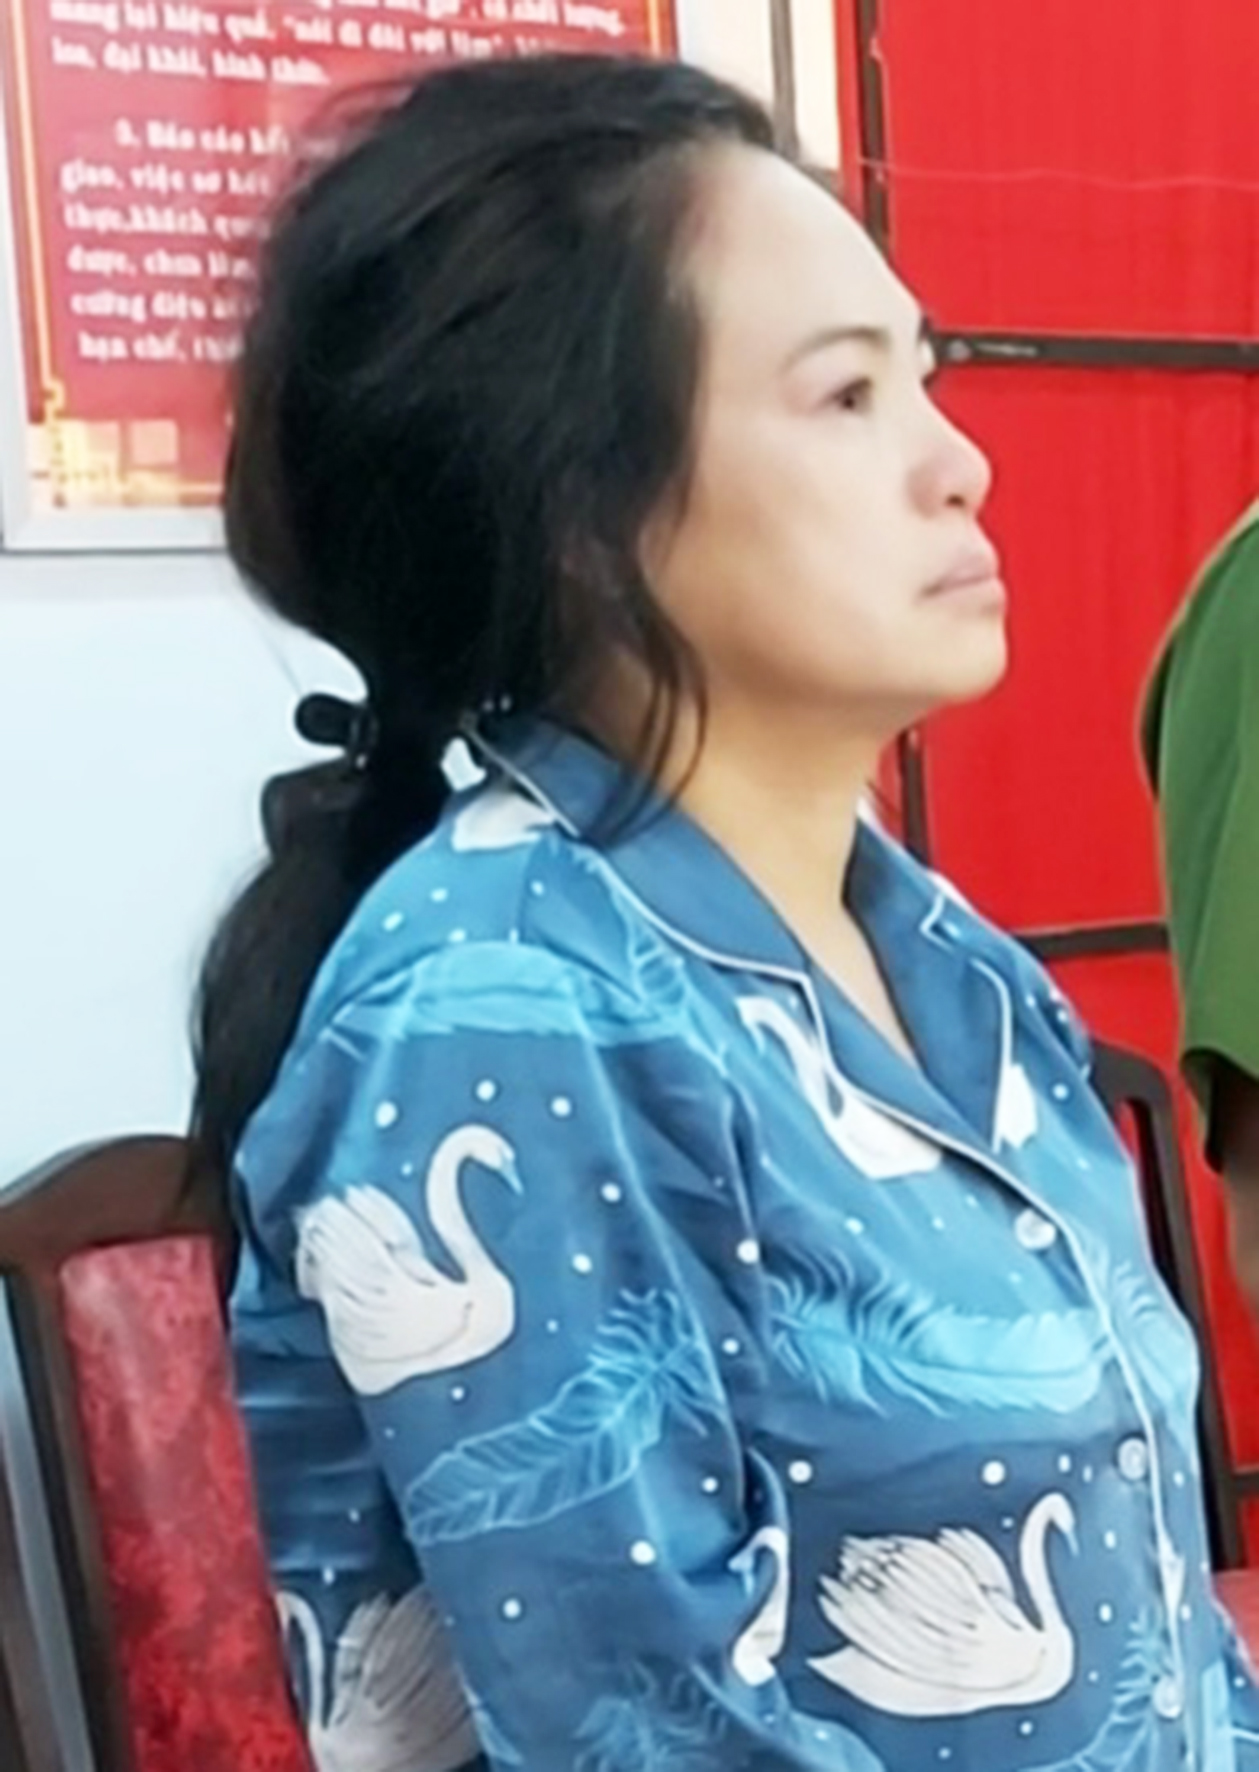 Bà Trần Thị Kim Loan thời điểm bị bắt.